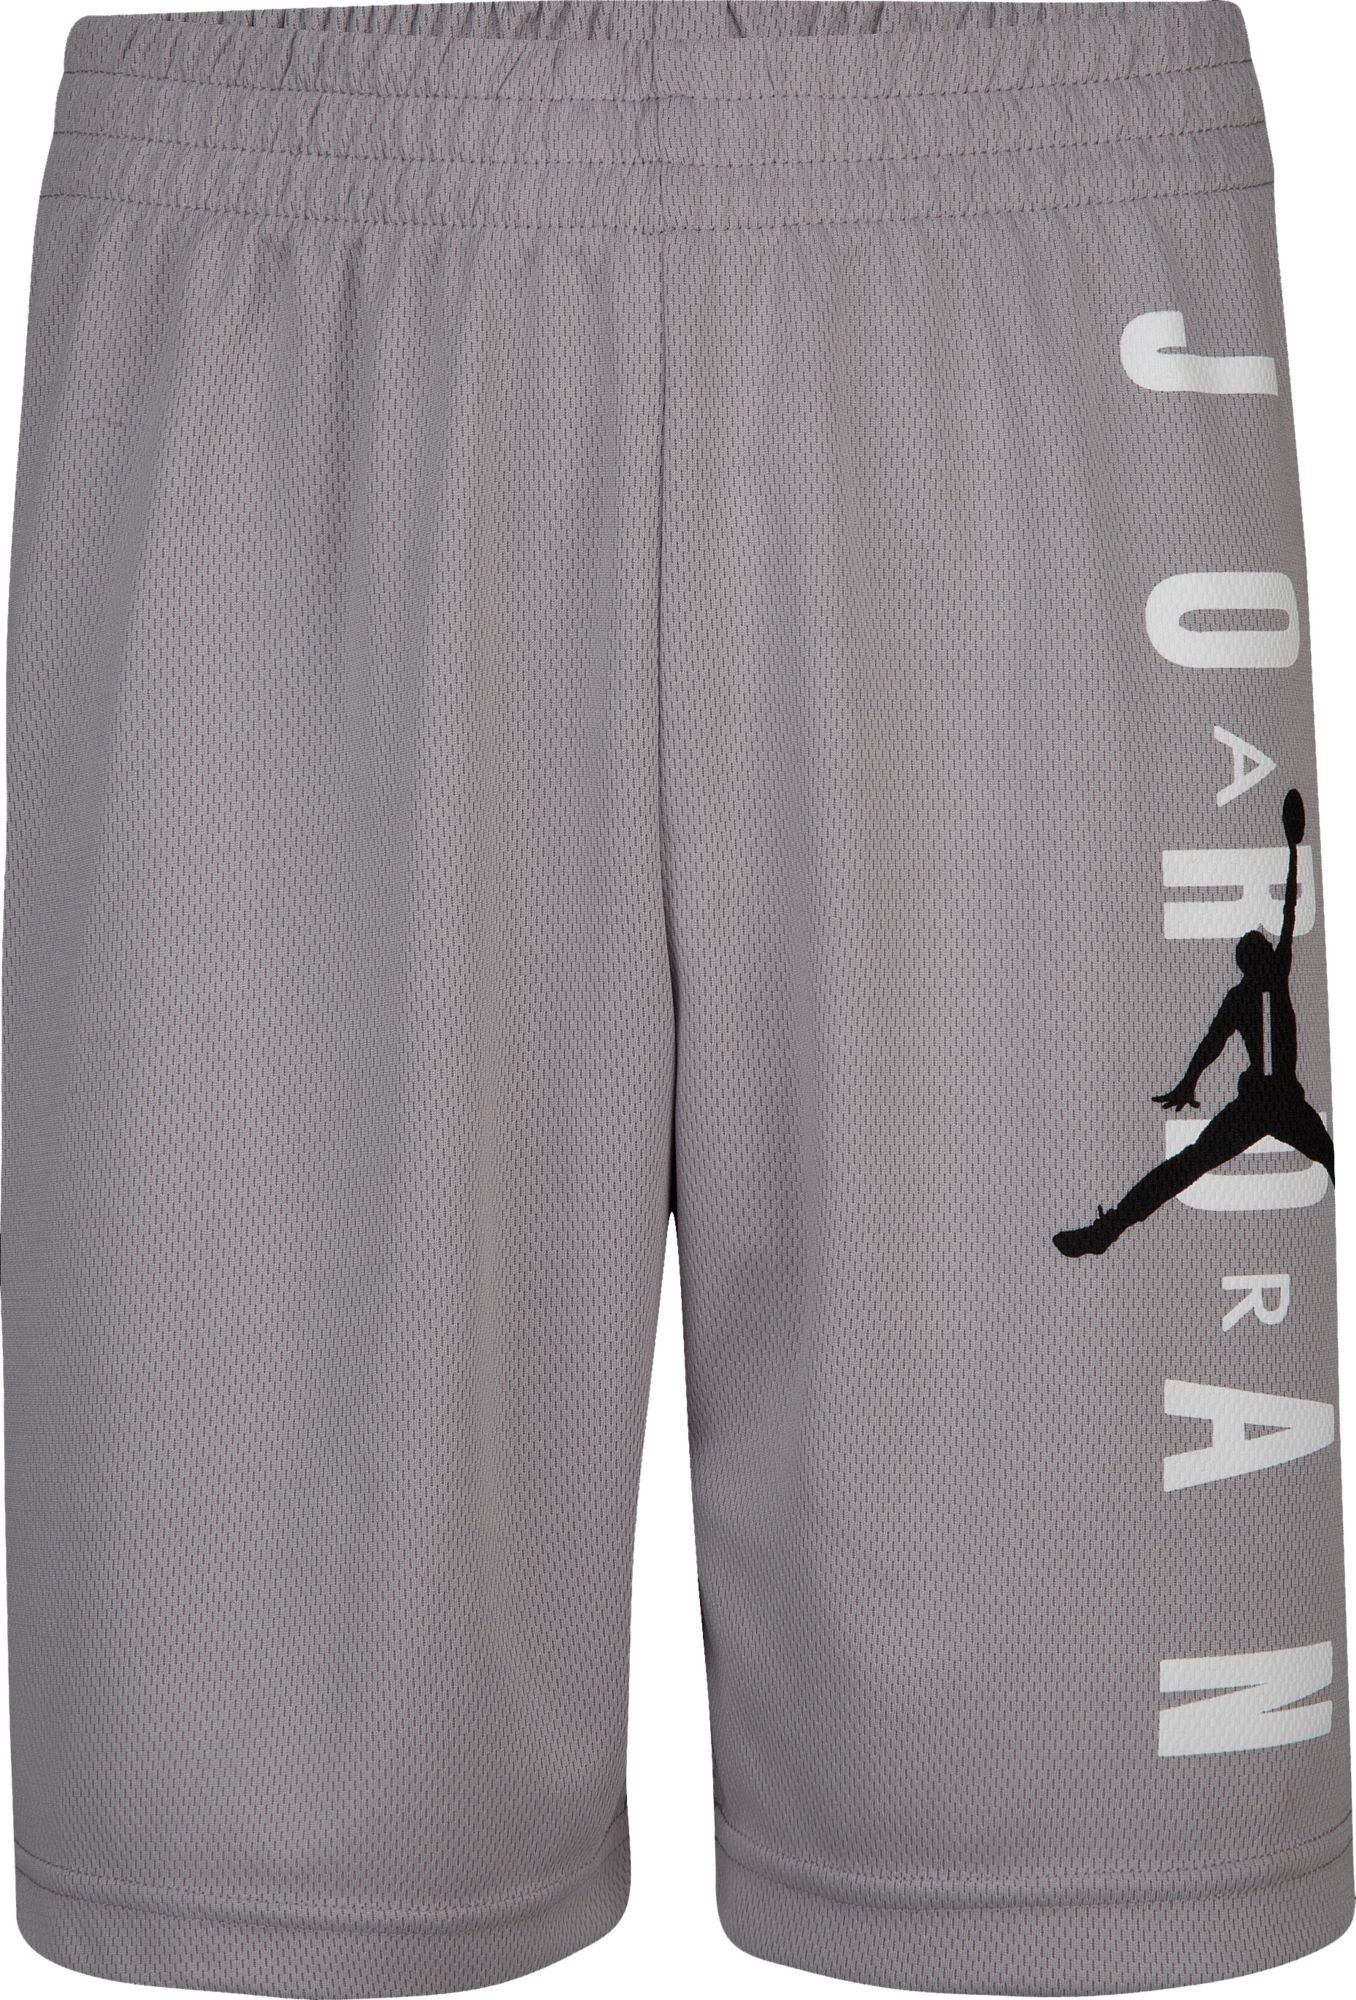 New Nike Air Jordan Jumpman Black White Diamond Mesh Shorts Men Large With  Tags